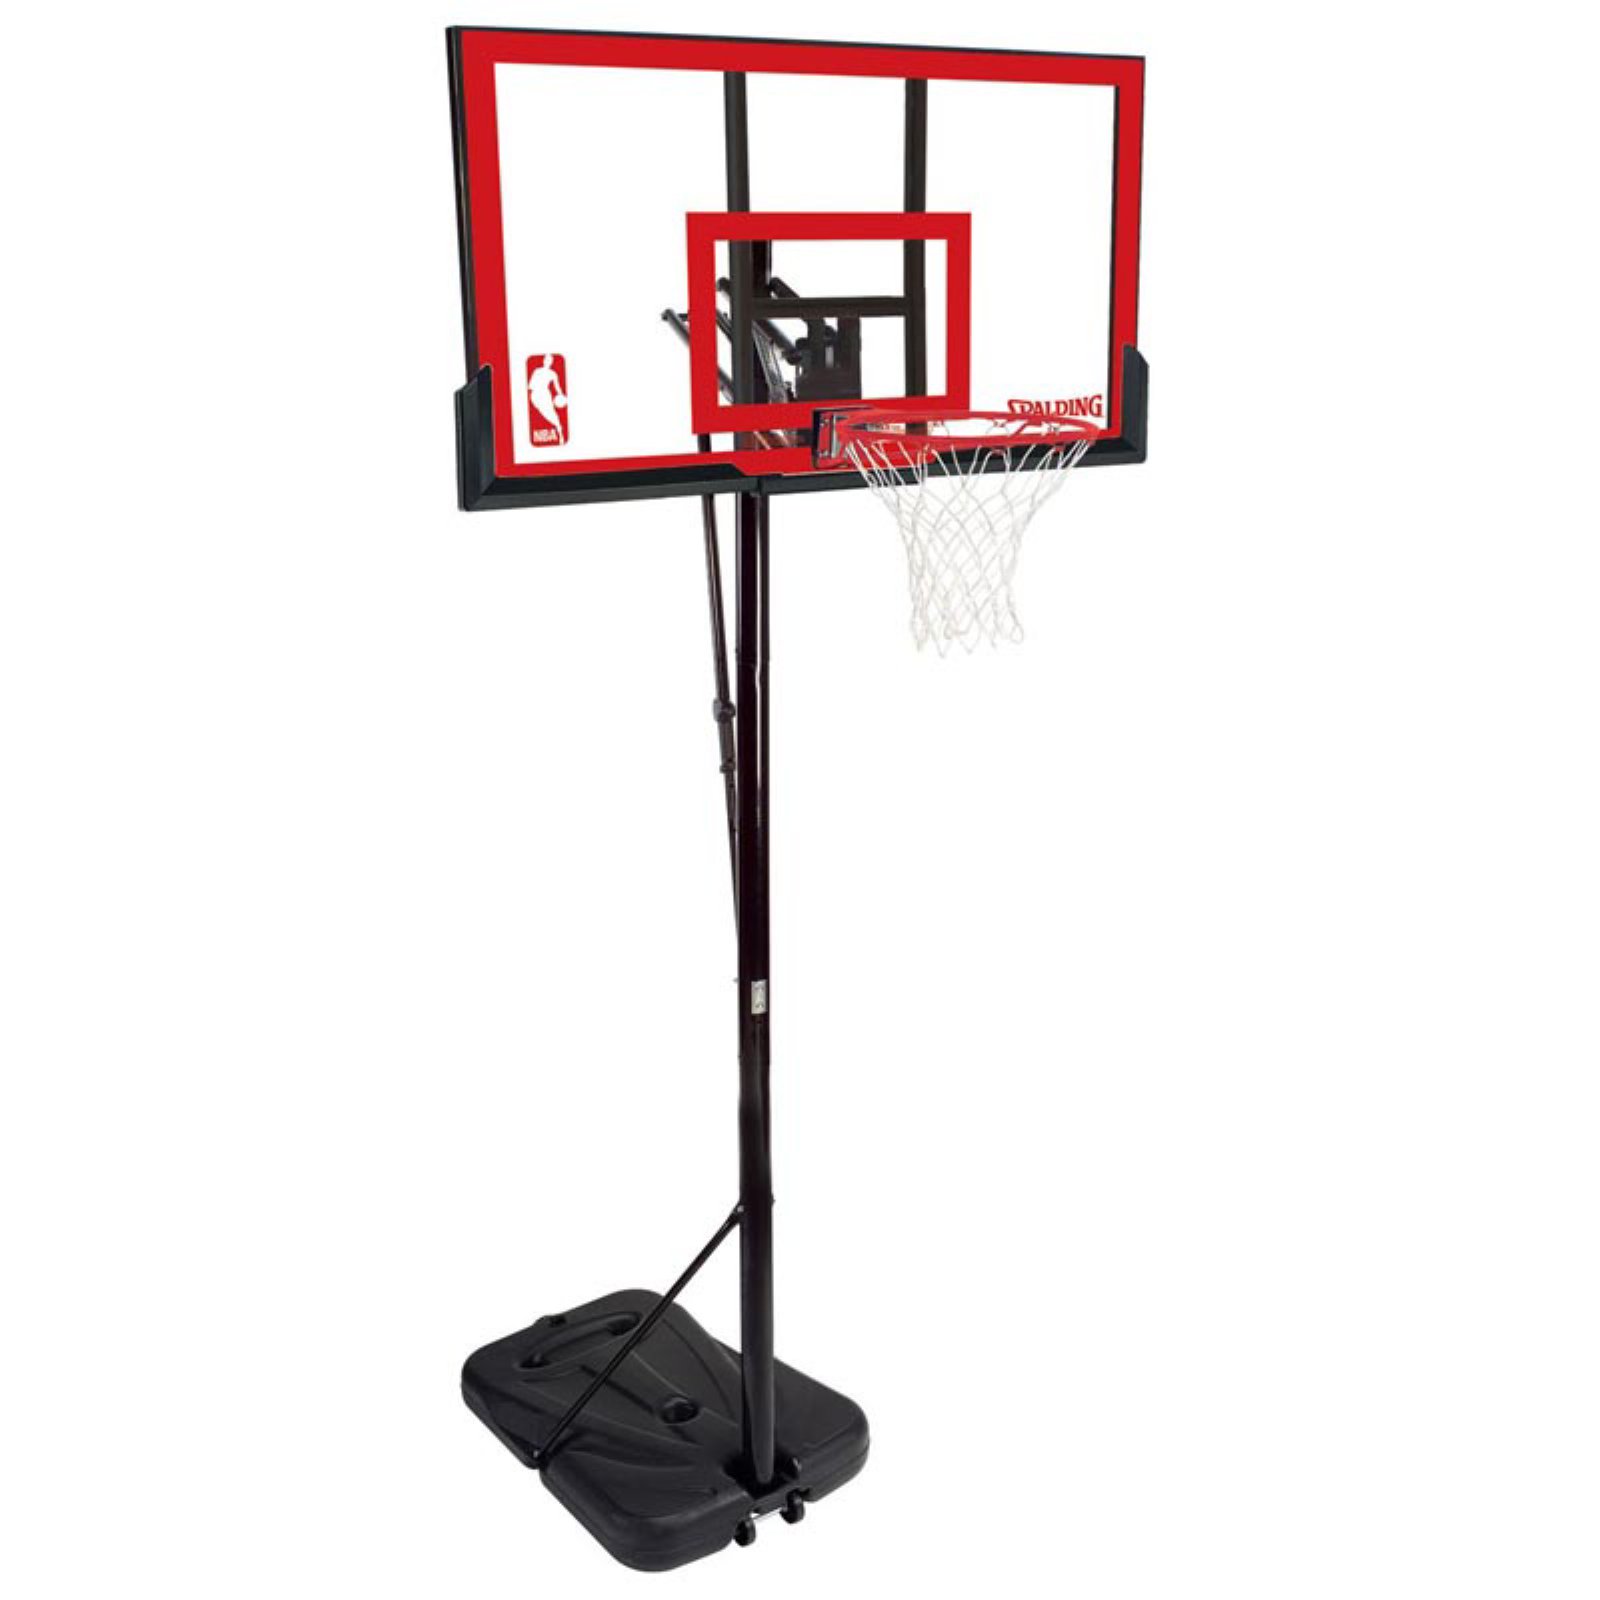 Spalding 48 Inch Residential Slam Portable Basketball Hoop - image 1 of 2